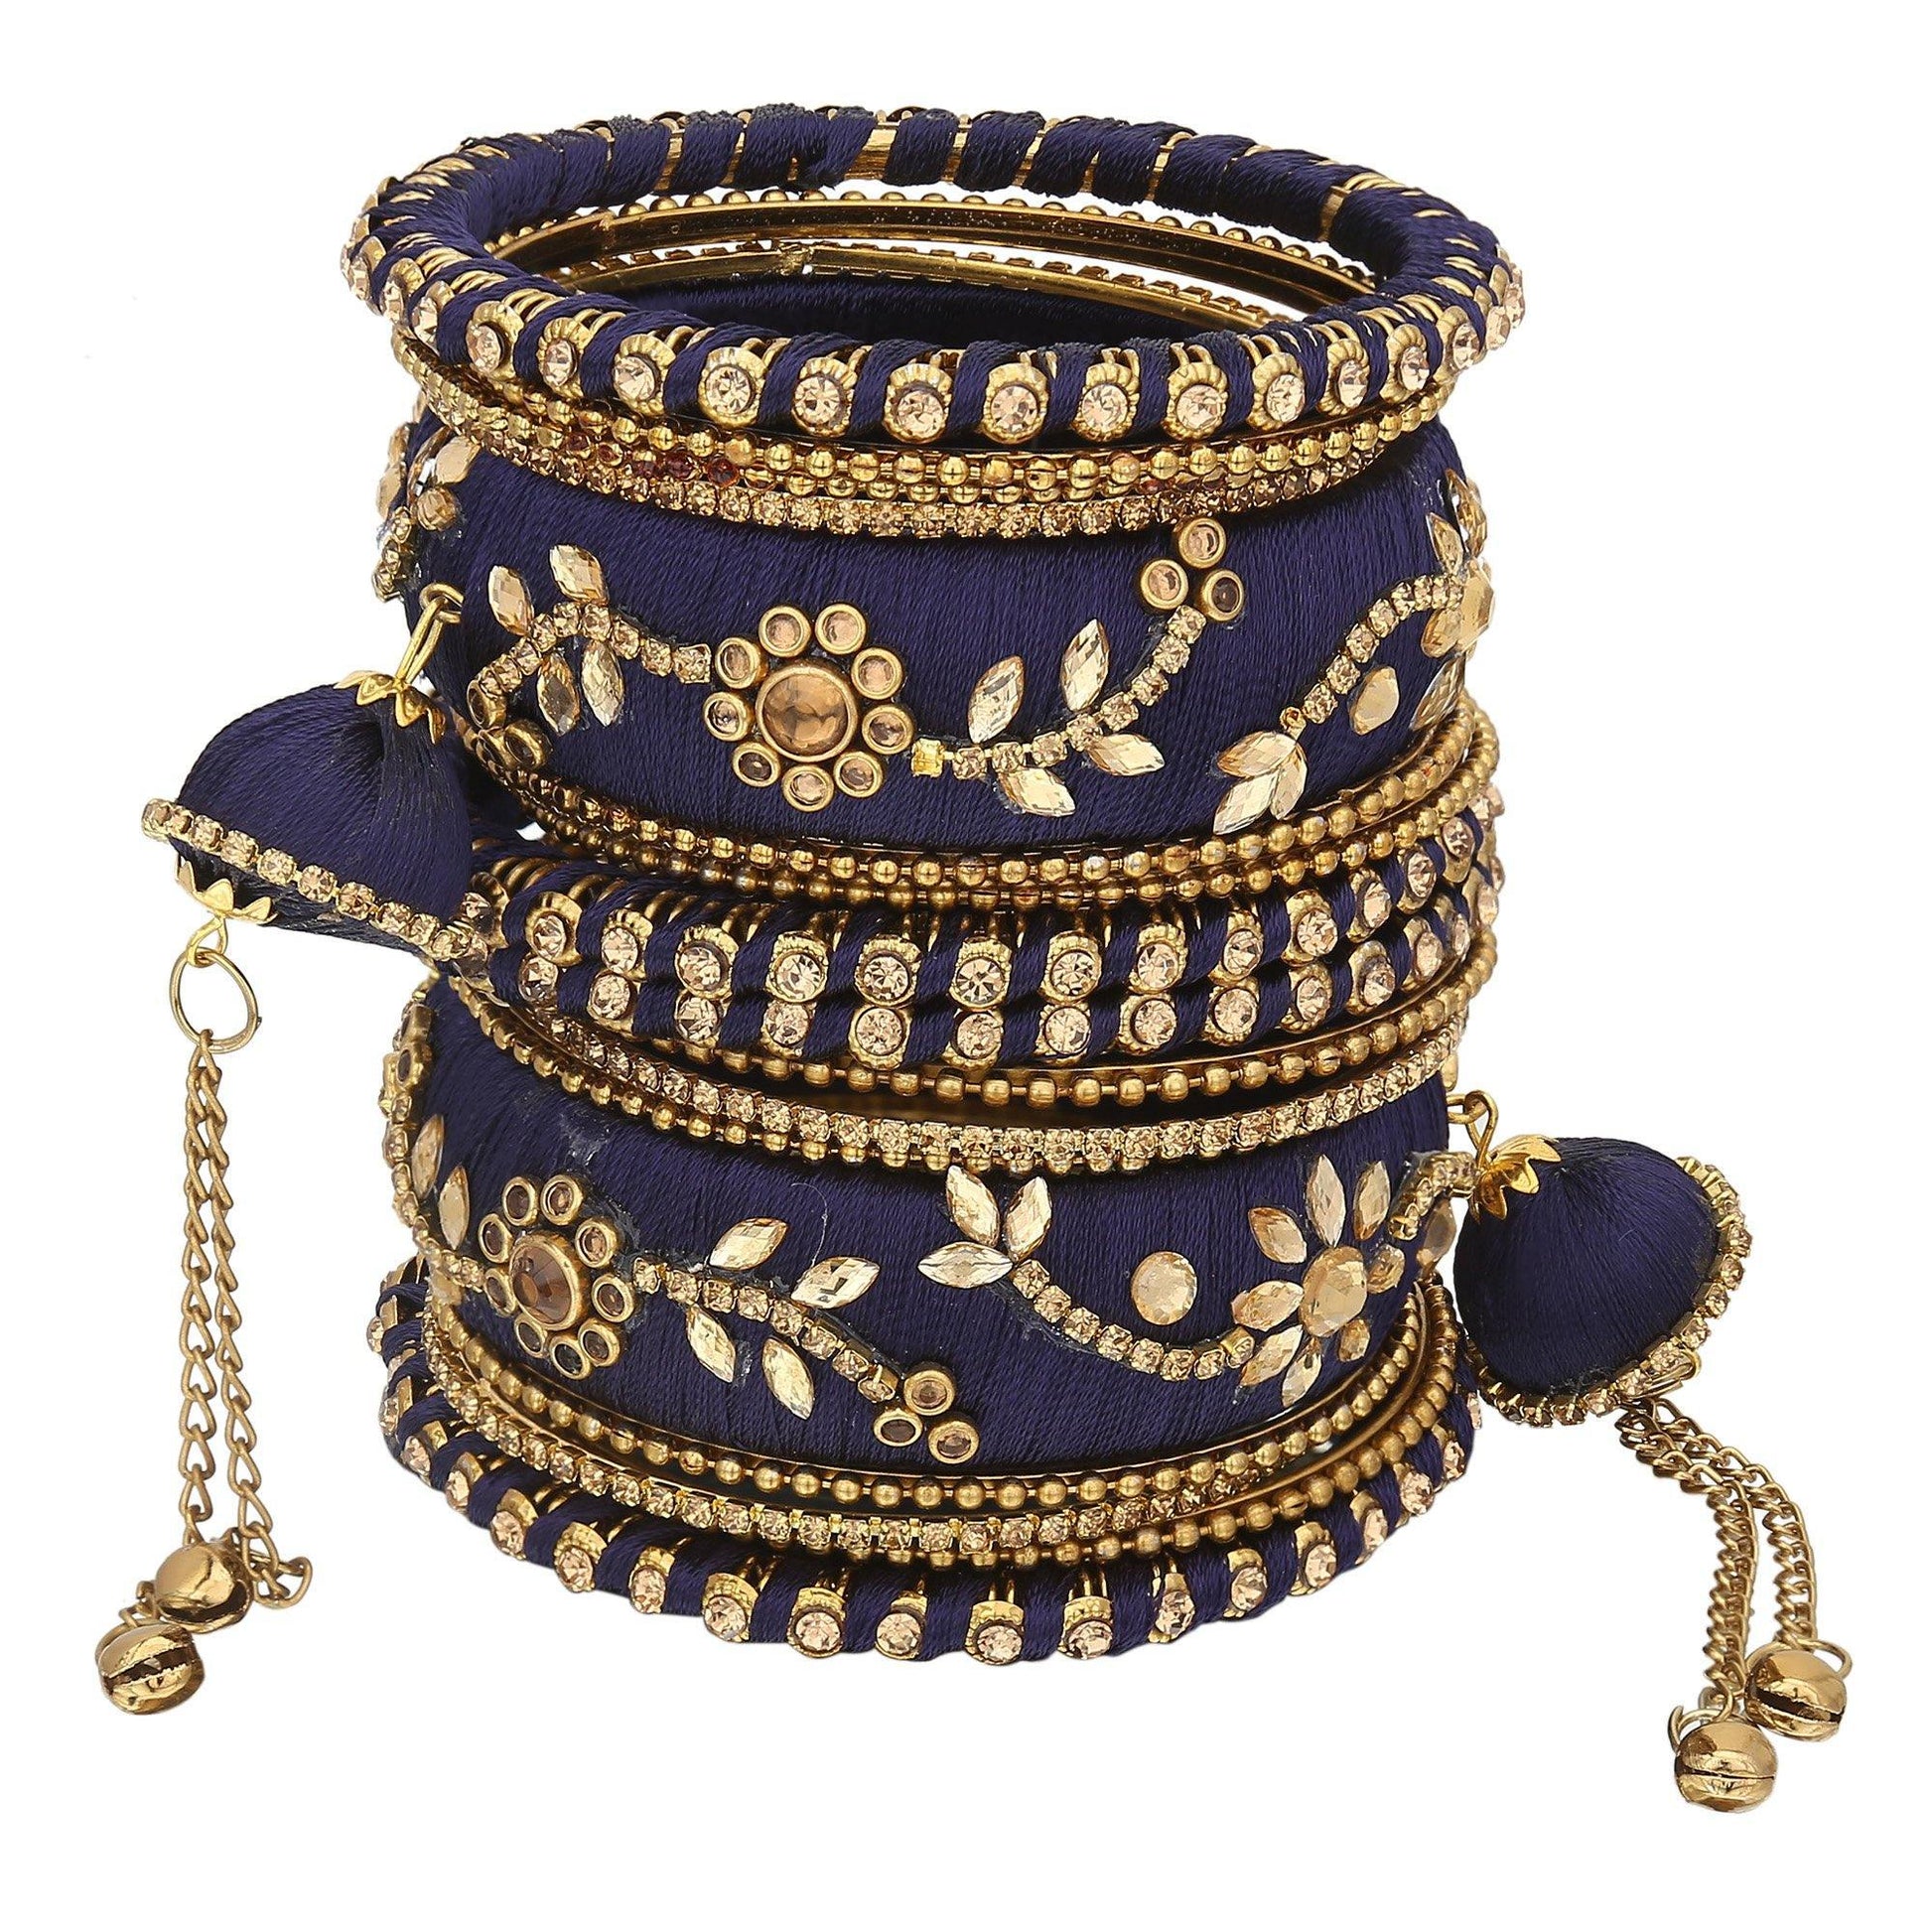 sukriti party wear silk thread tassel latkan navy-blue bangles jewelry for girls & women – set of 18